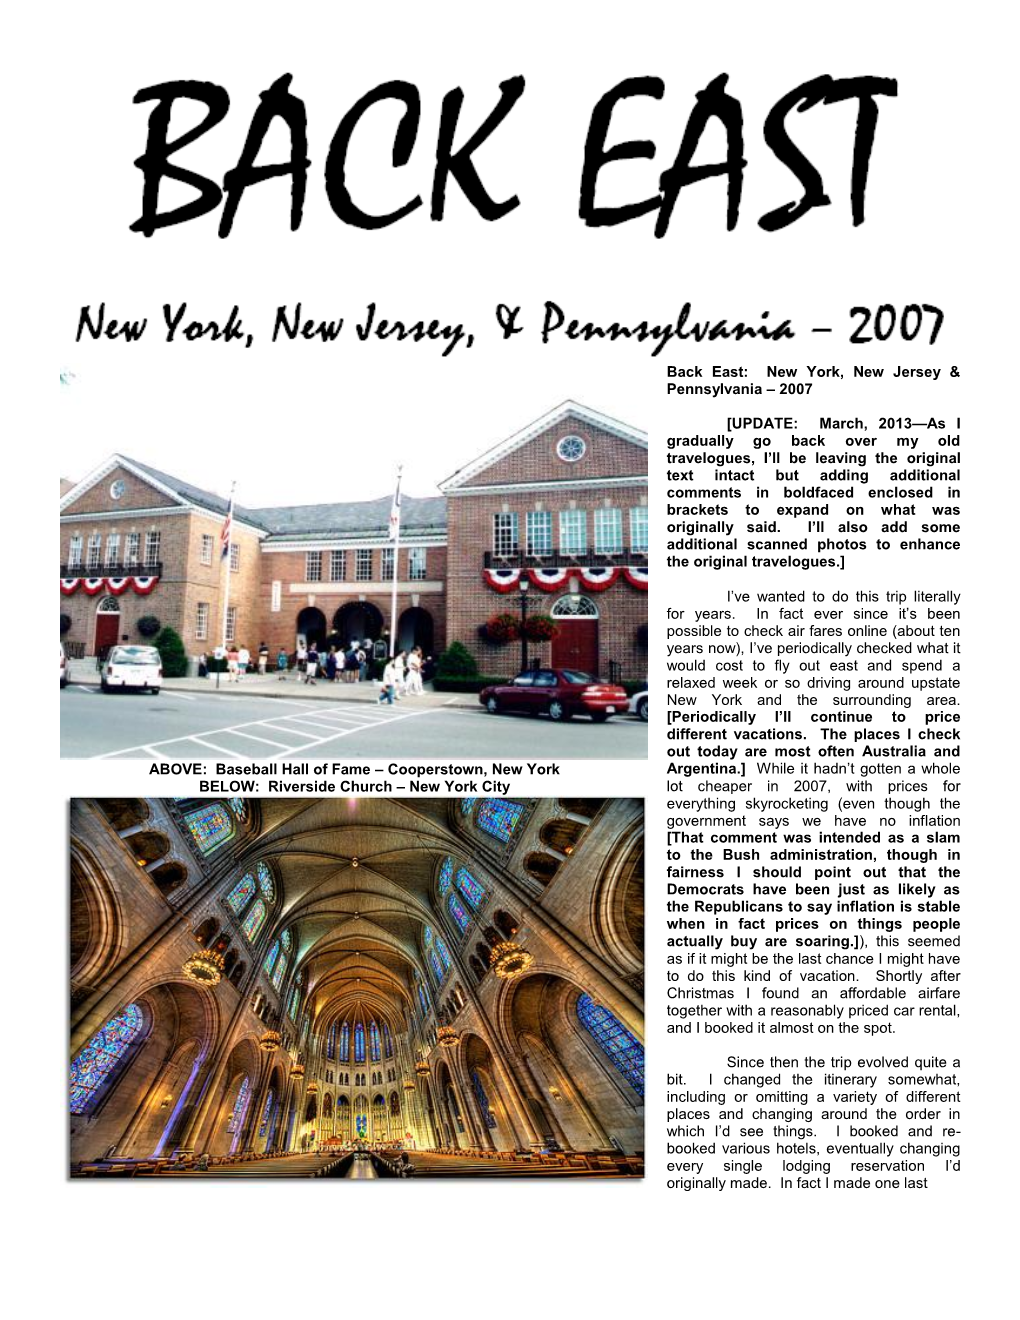 Back East: New York, New Jersey & Pennsylvania – 2007